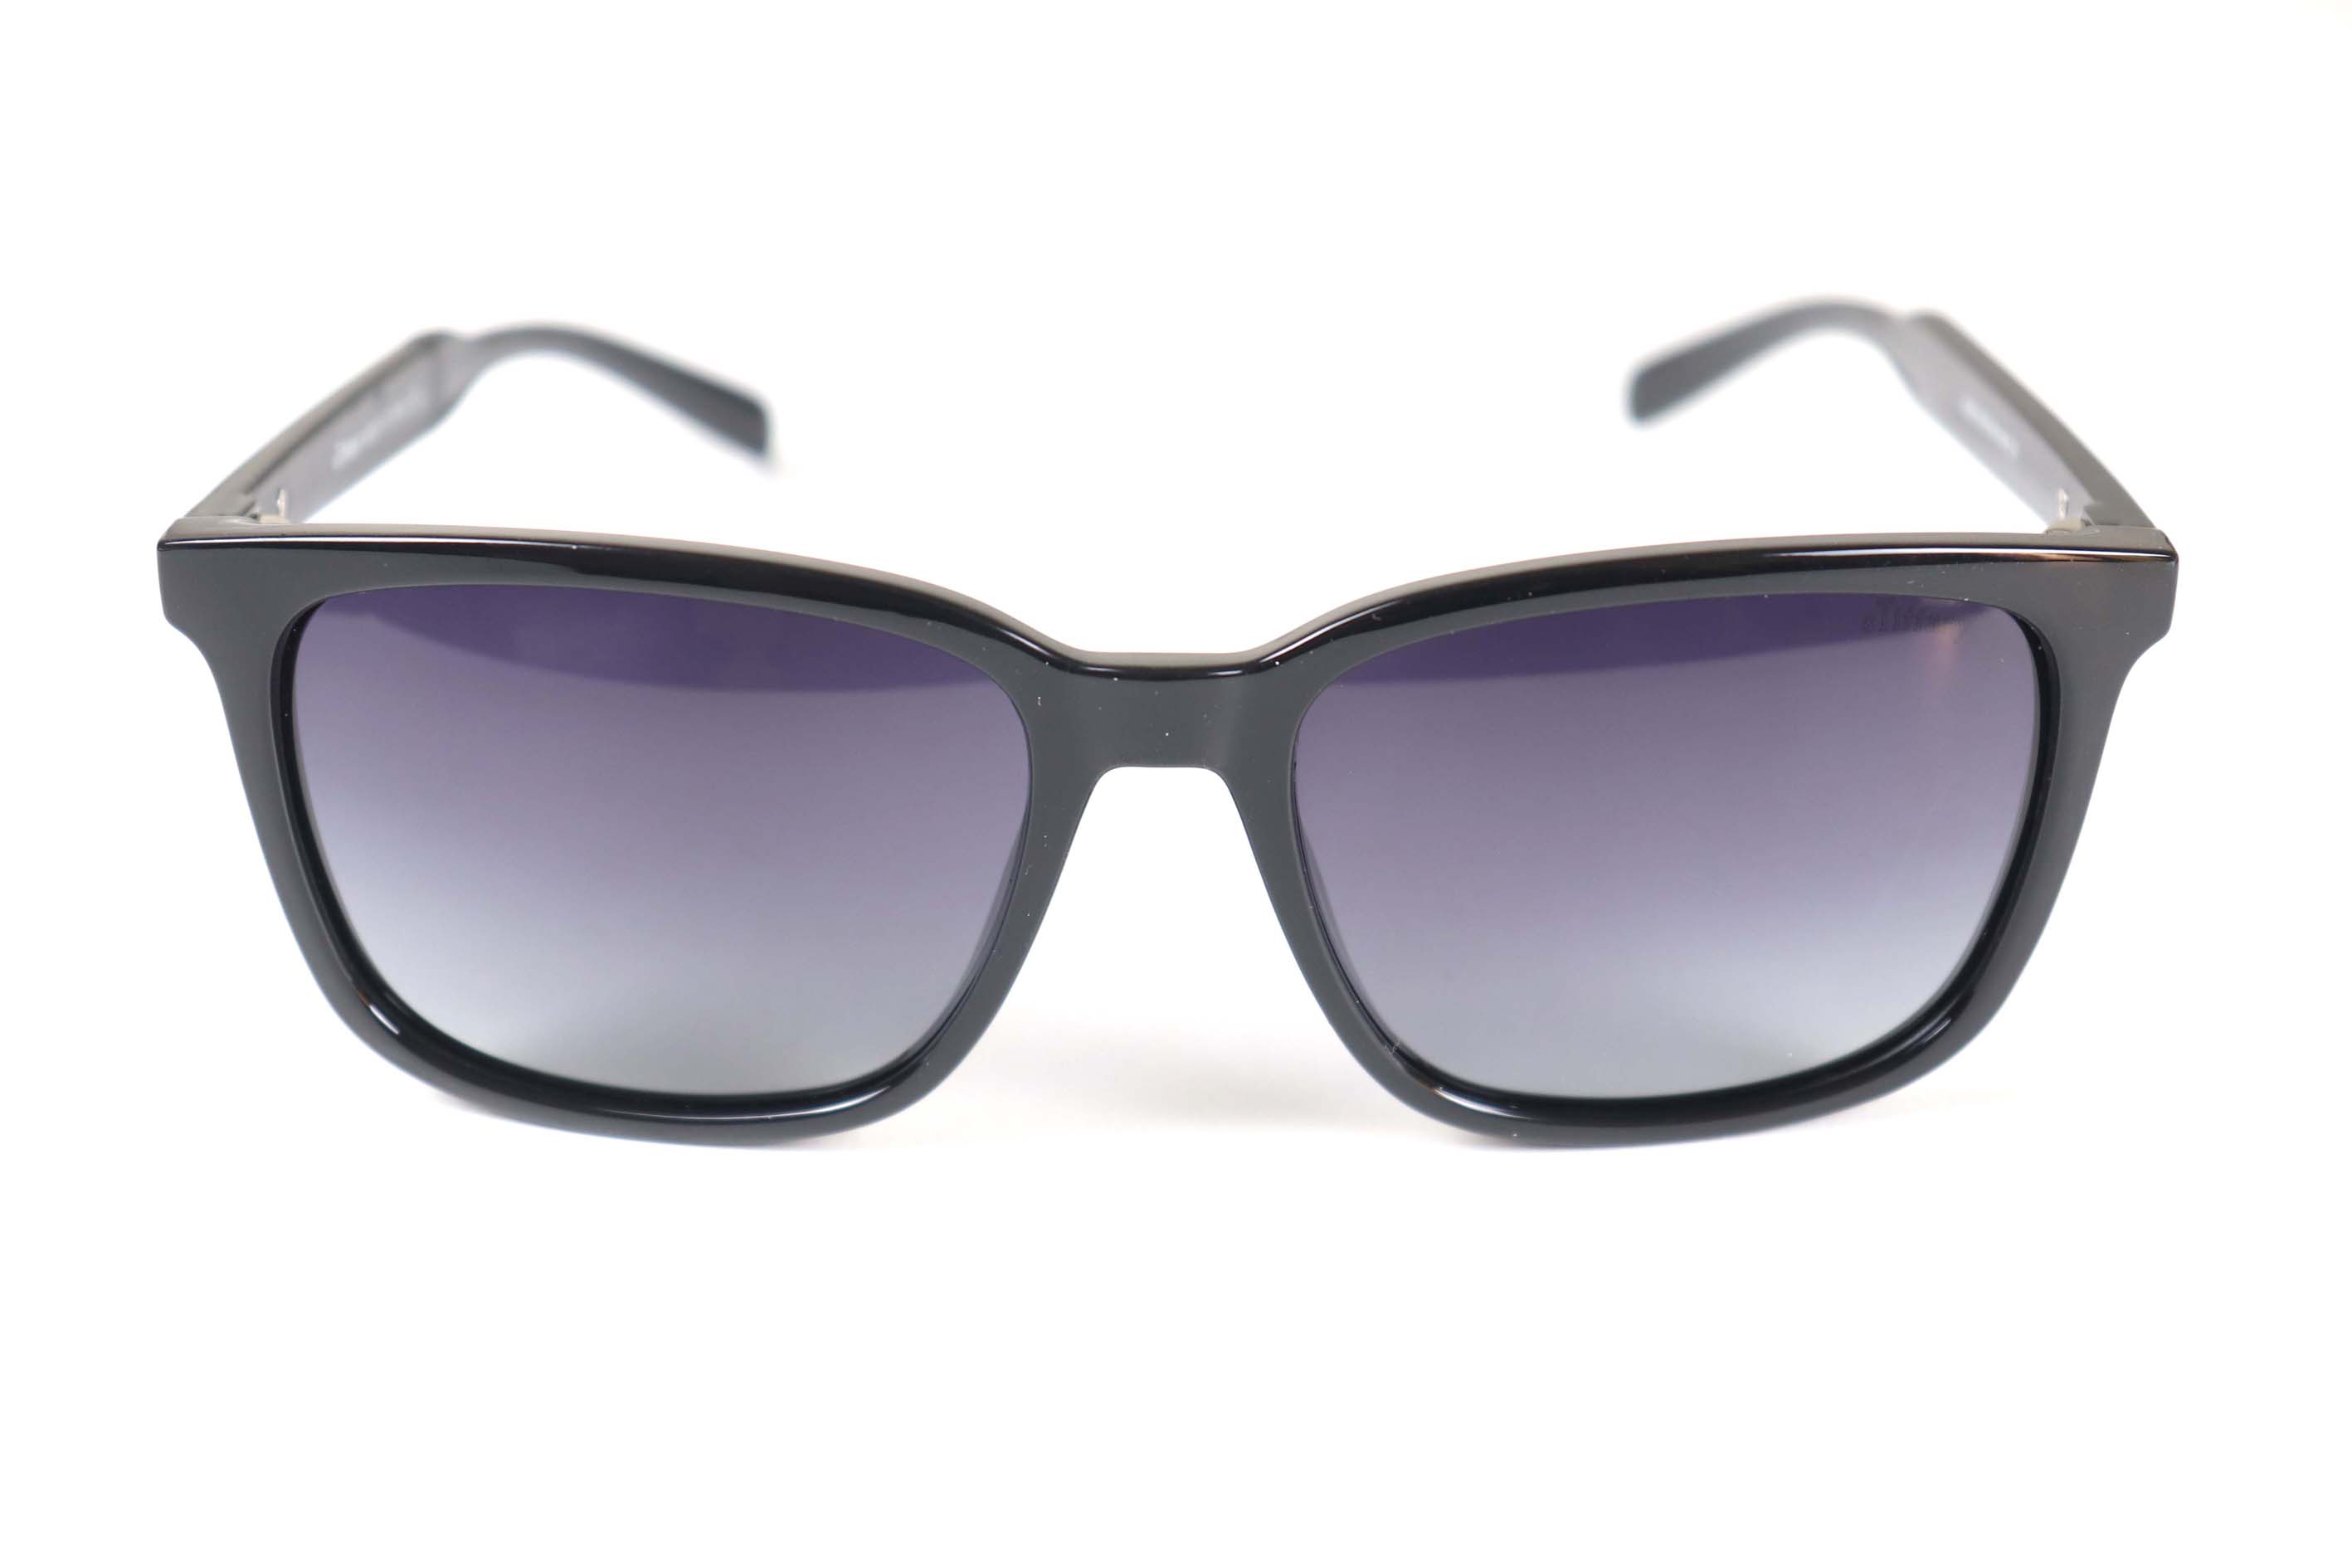 Stiffany Sunglasses-oR8802-c1-s